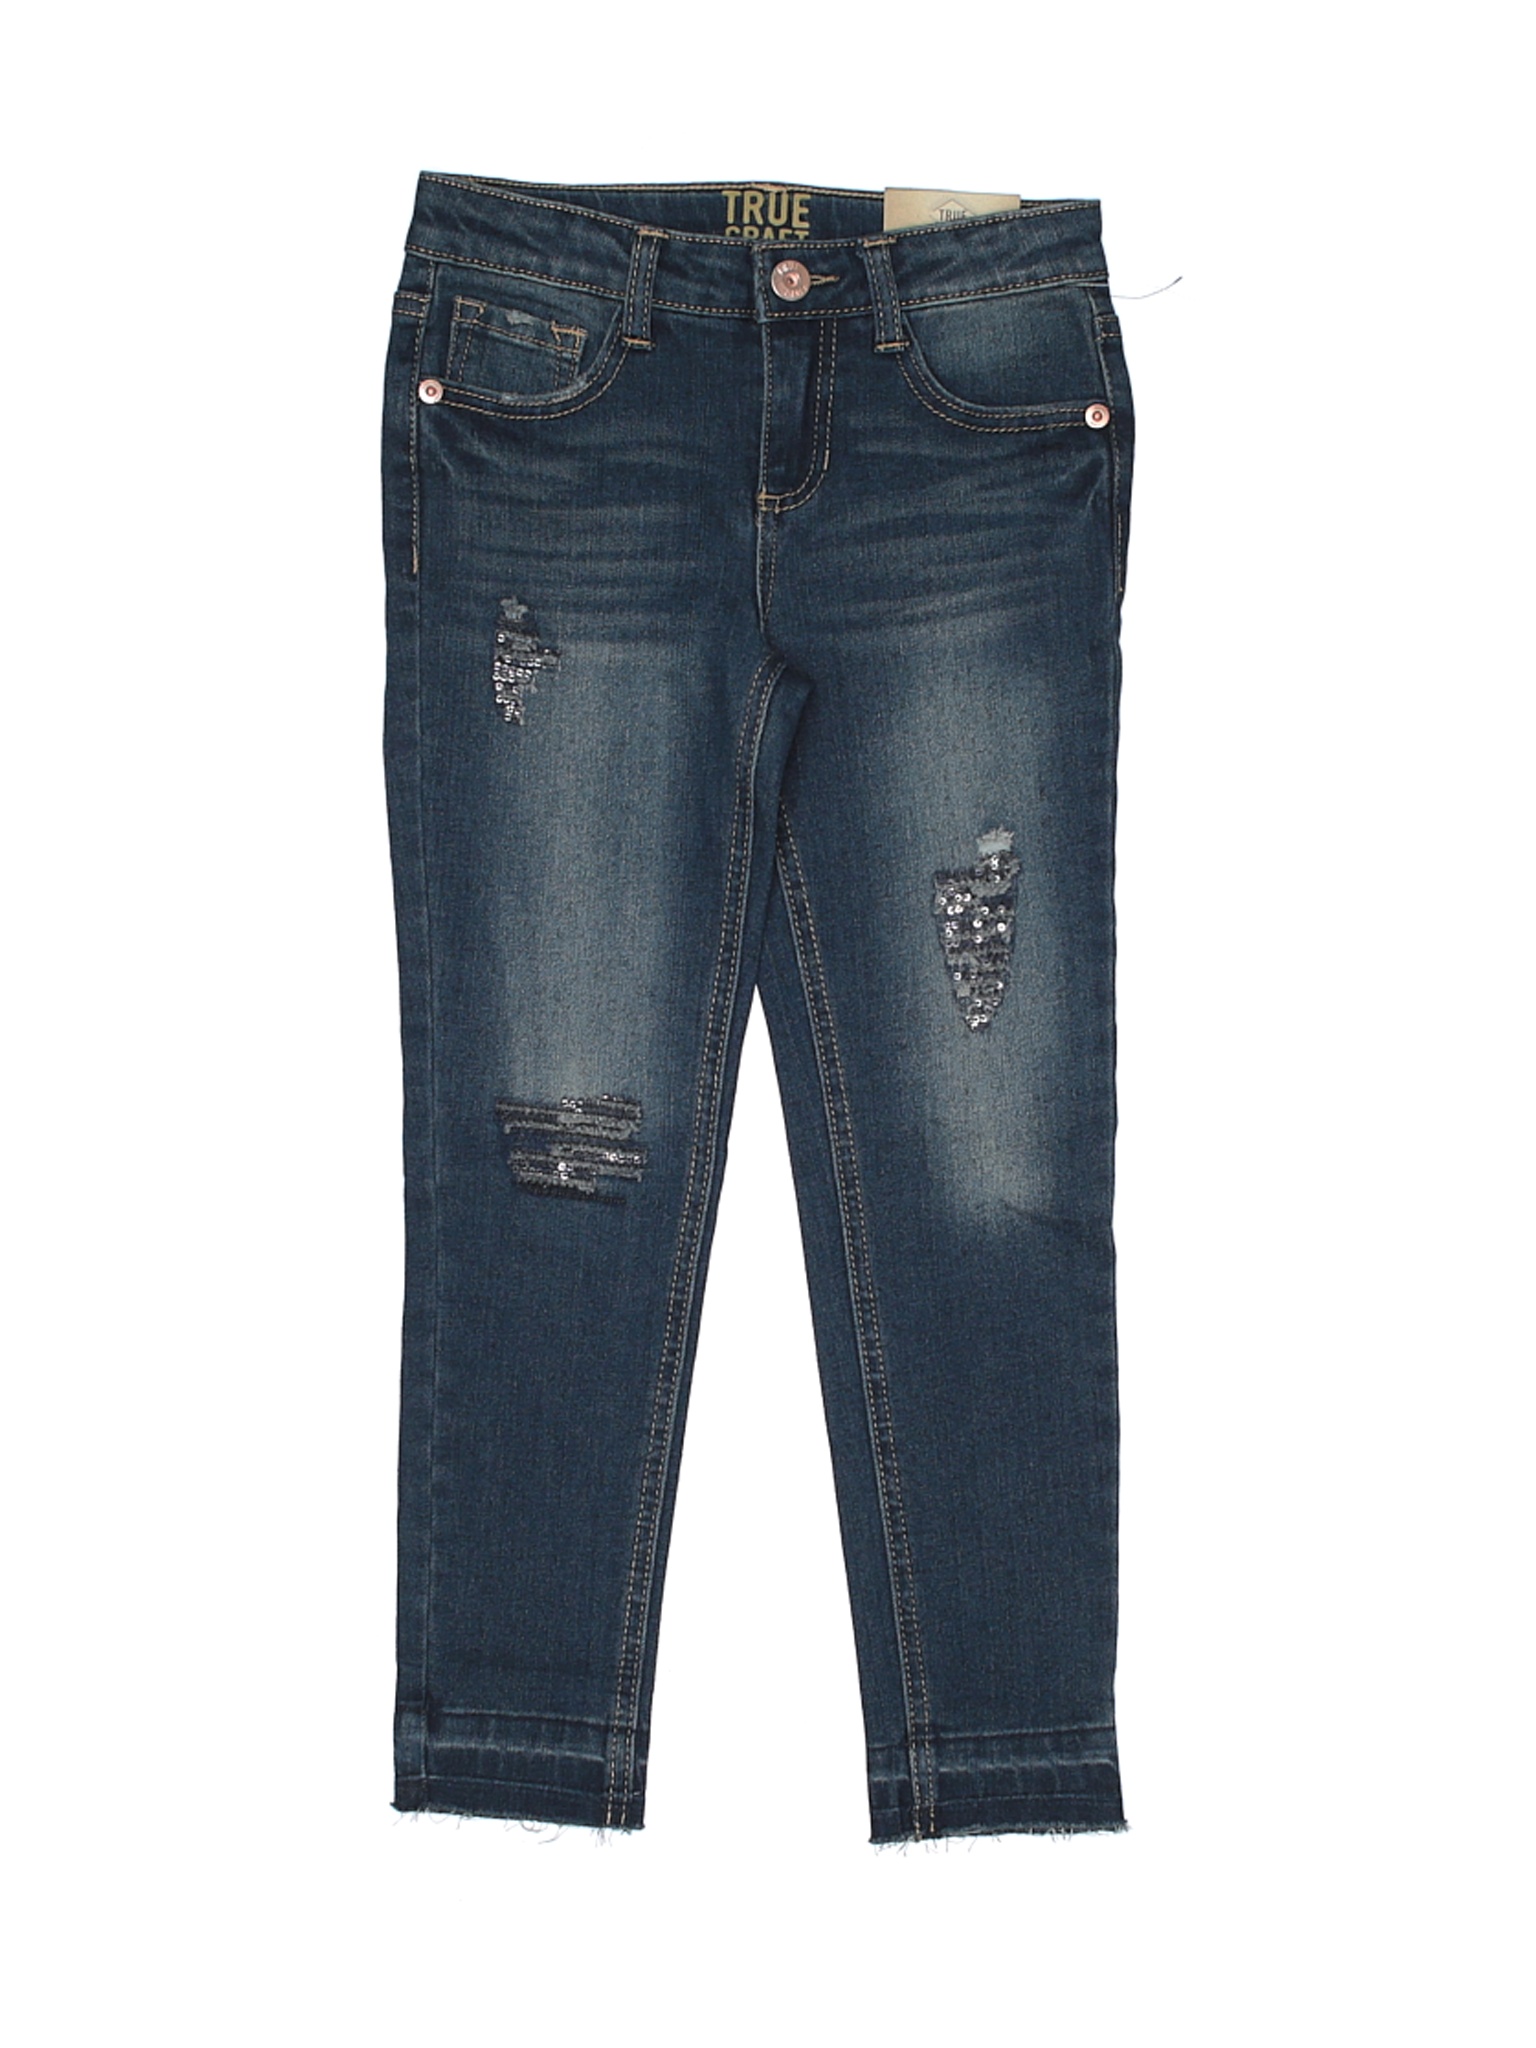 NWT True Craft Girls Blue Jeans 6 | eBay